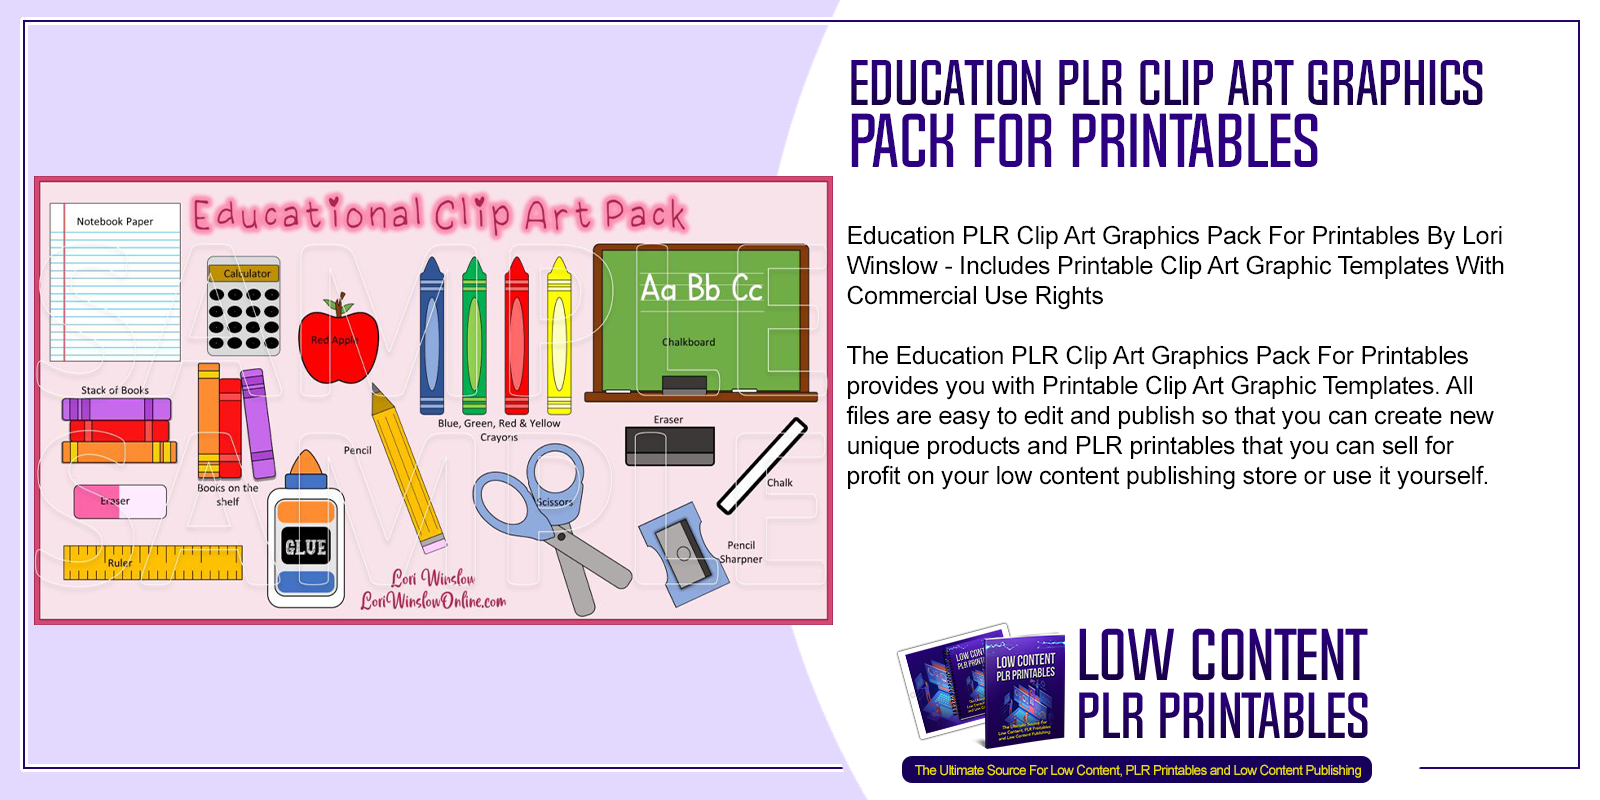 Education PLR Clip Art Graphics Pack For Printables